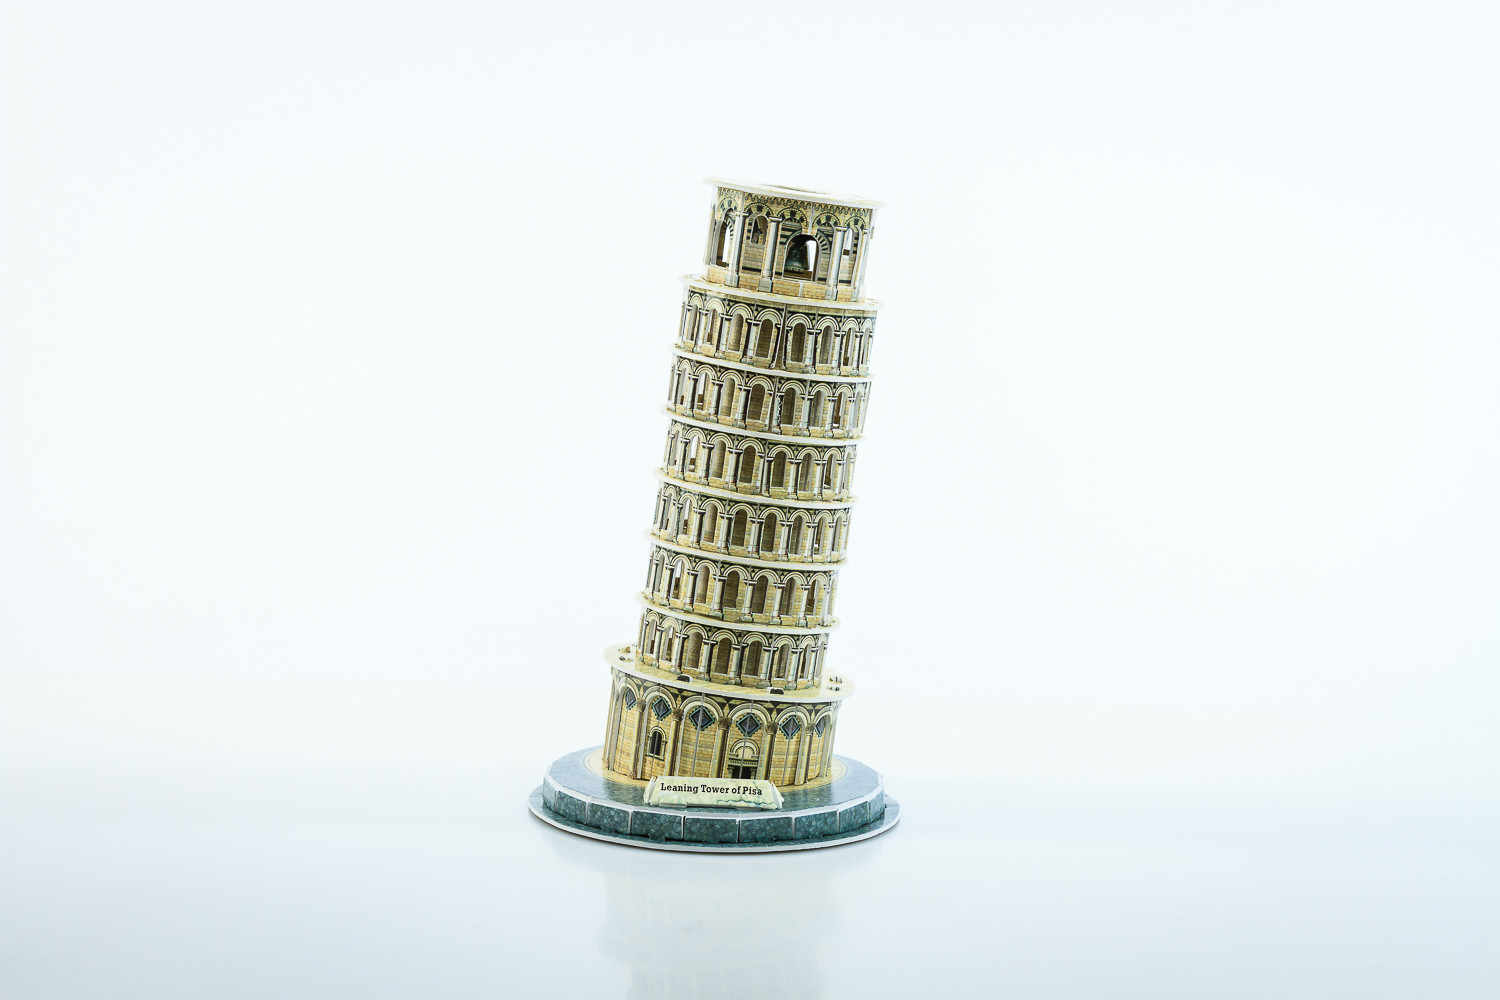 Imagen Rompecabezas 3D : Torre Empinada de pisa 4